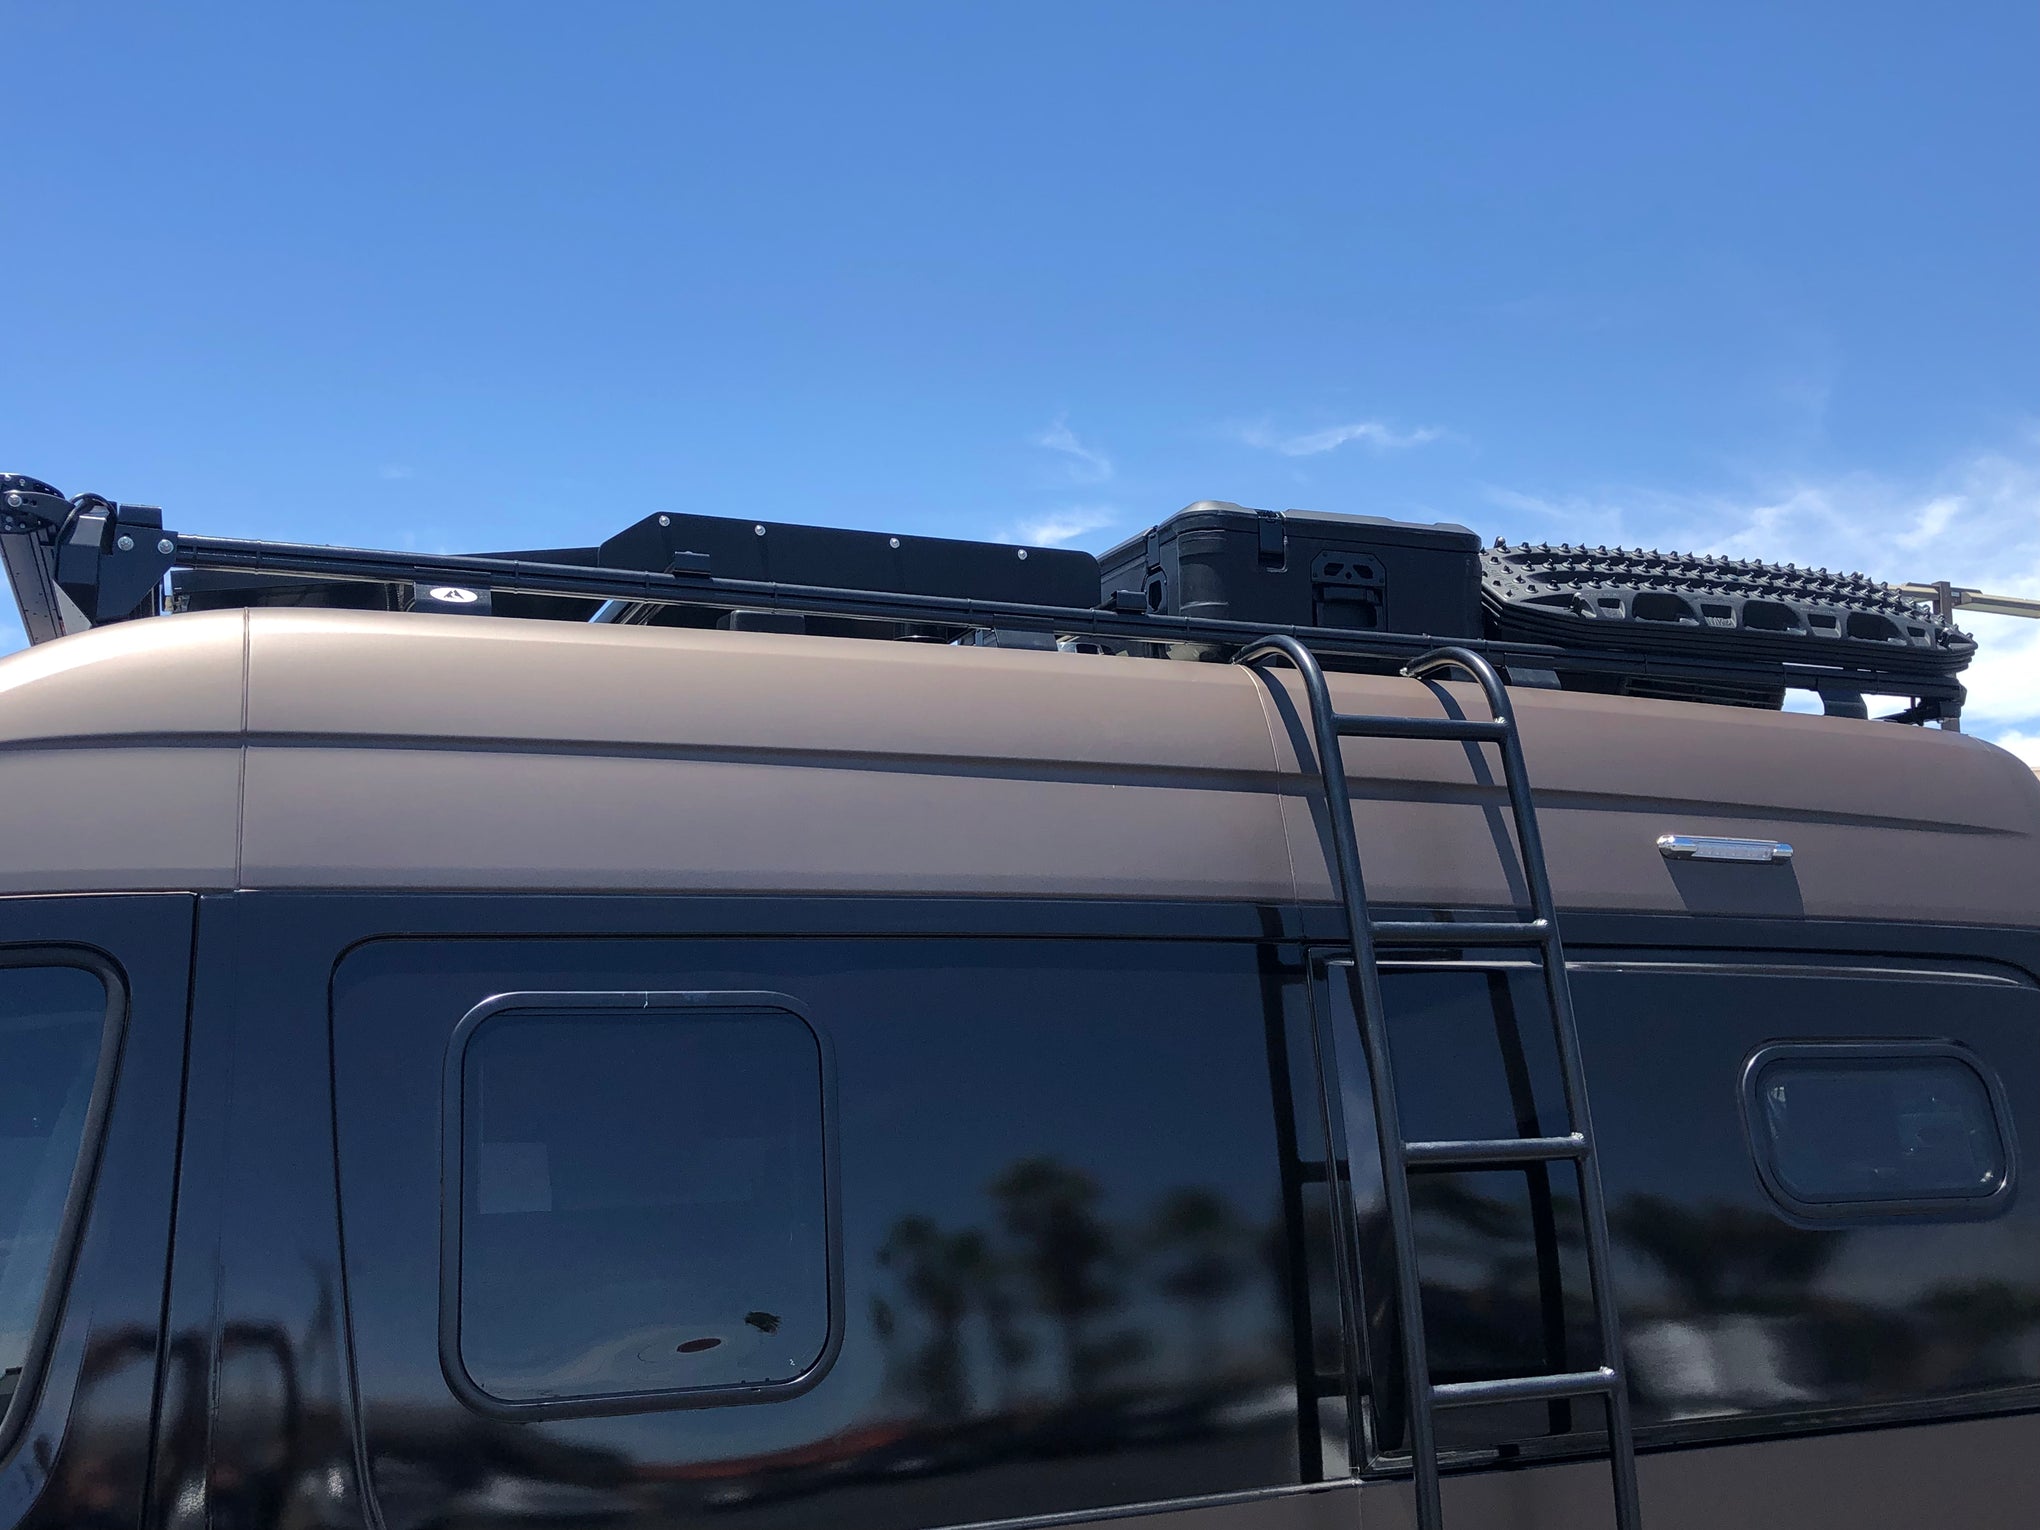 Aluminess Sprinter High Roof Side Ladder for Sprinter Vans